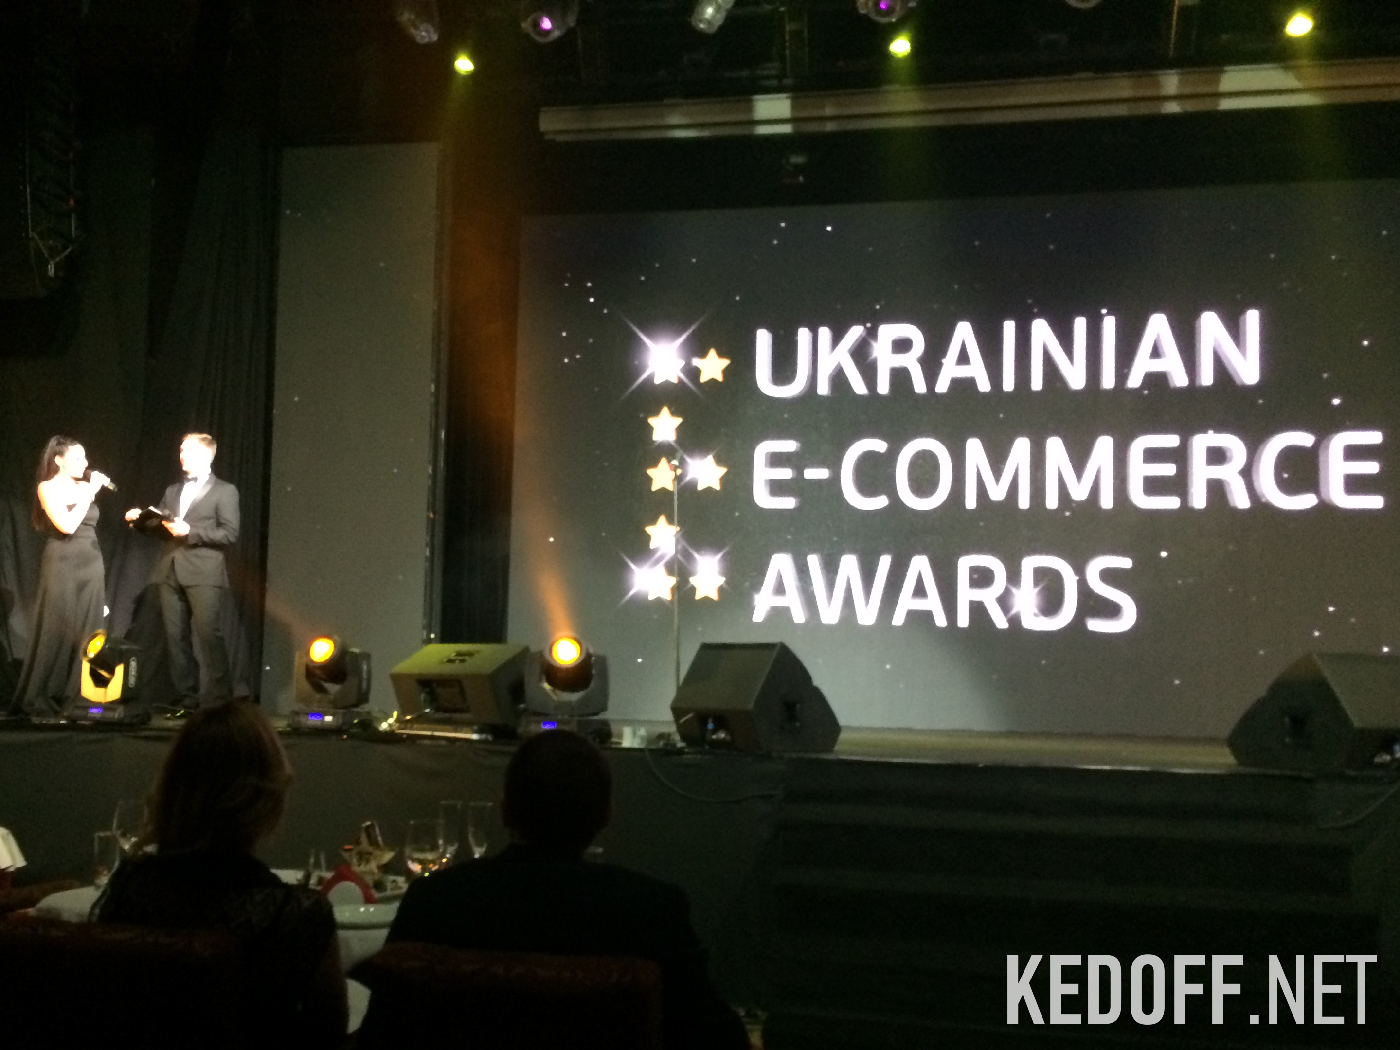 інтернет магазин взуття kedoff.net Ukrainian E-commerce Awards 2016